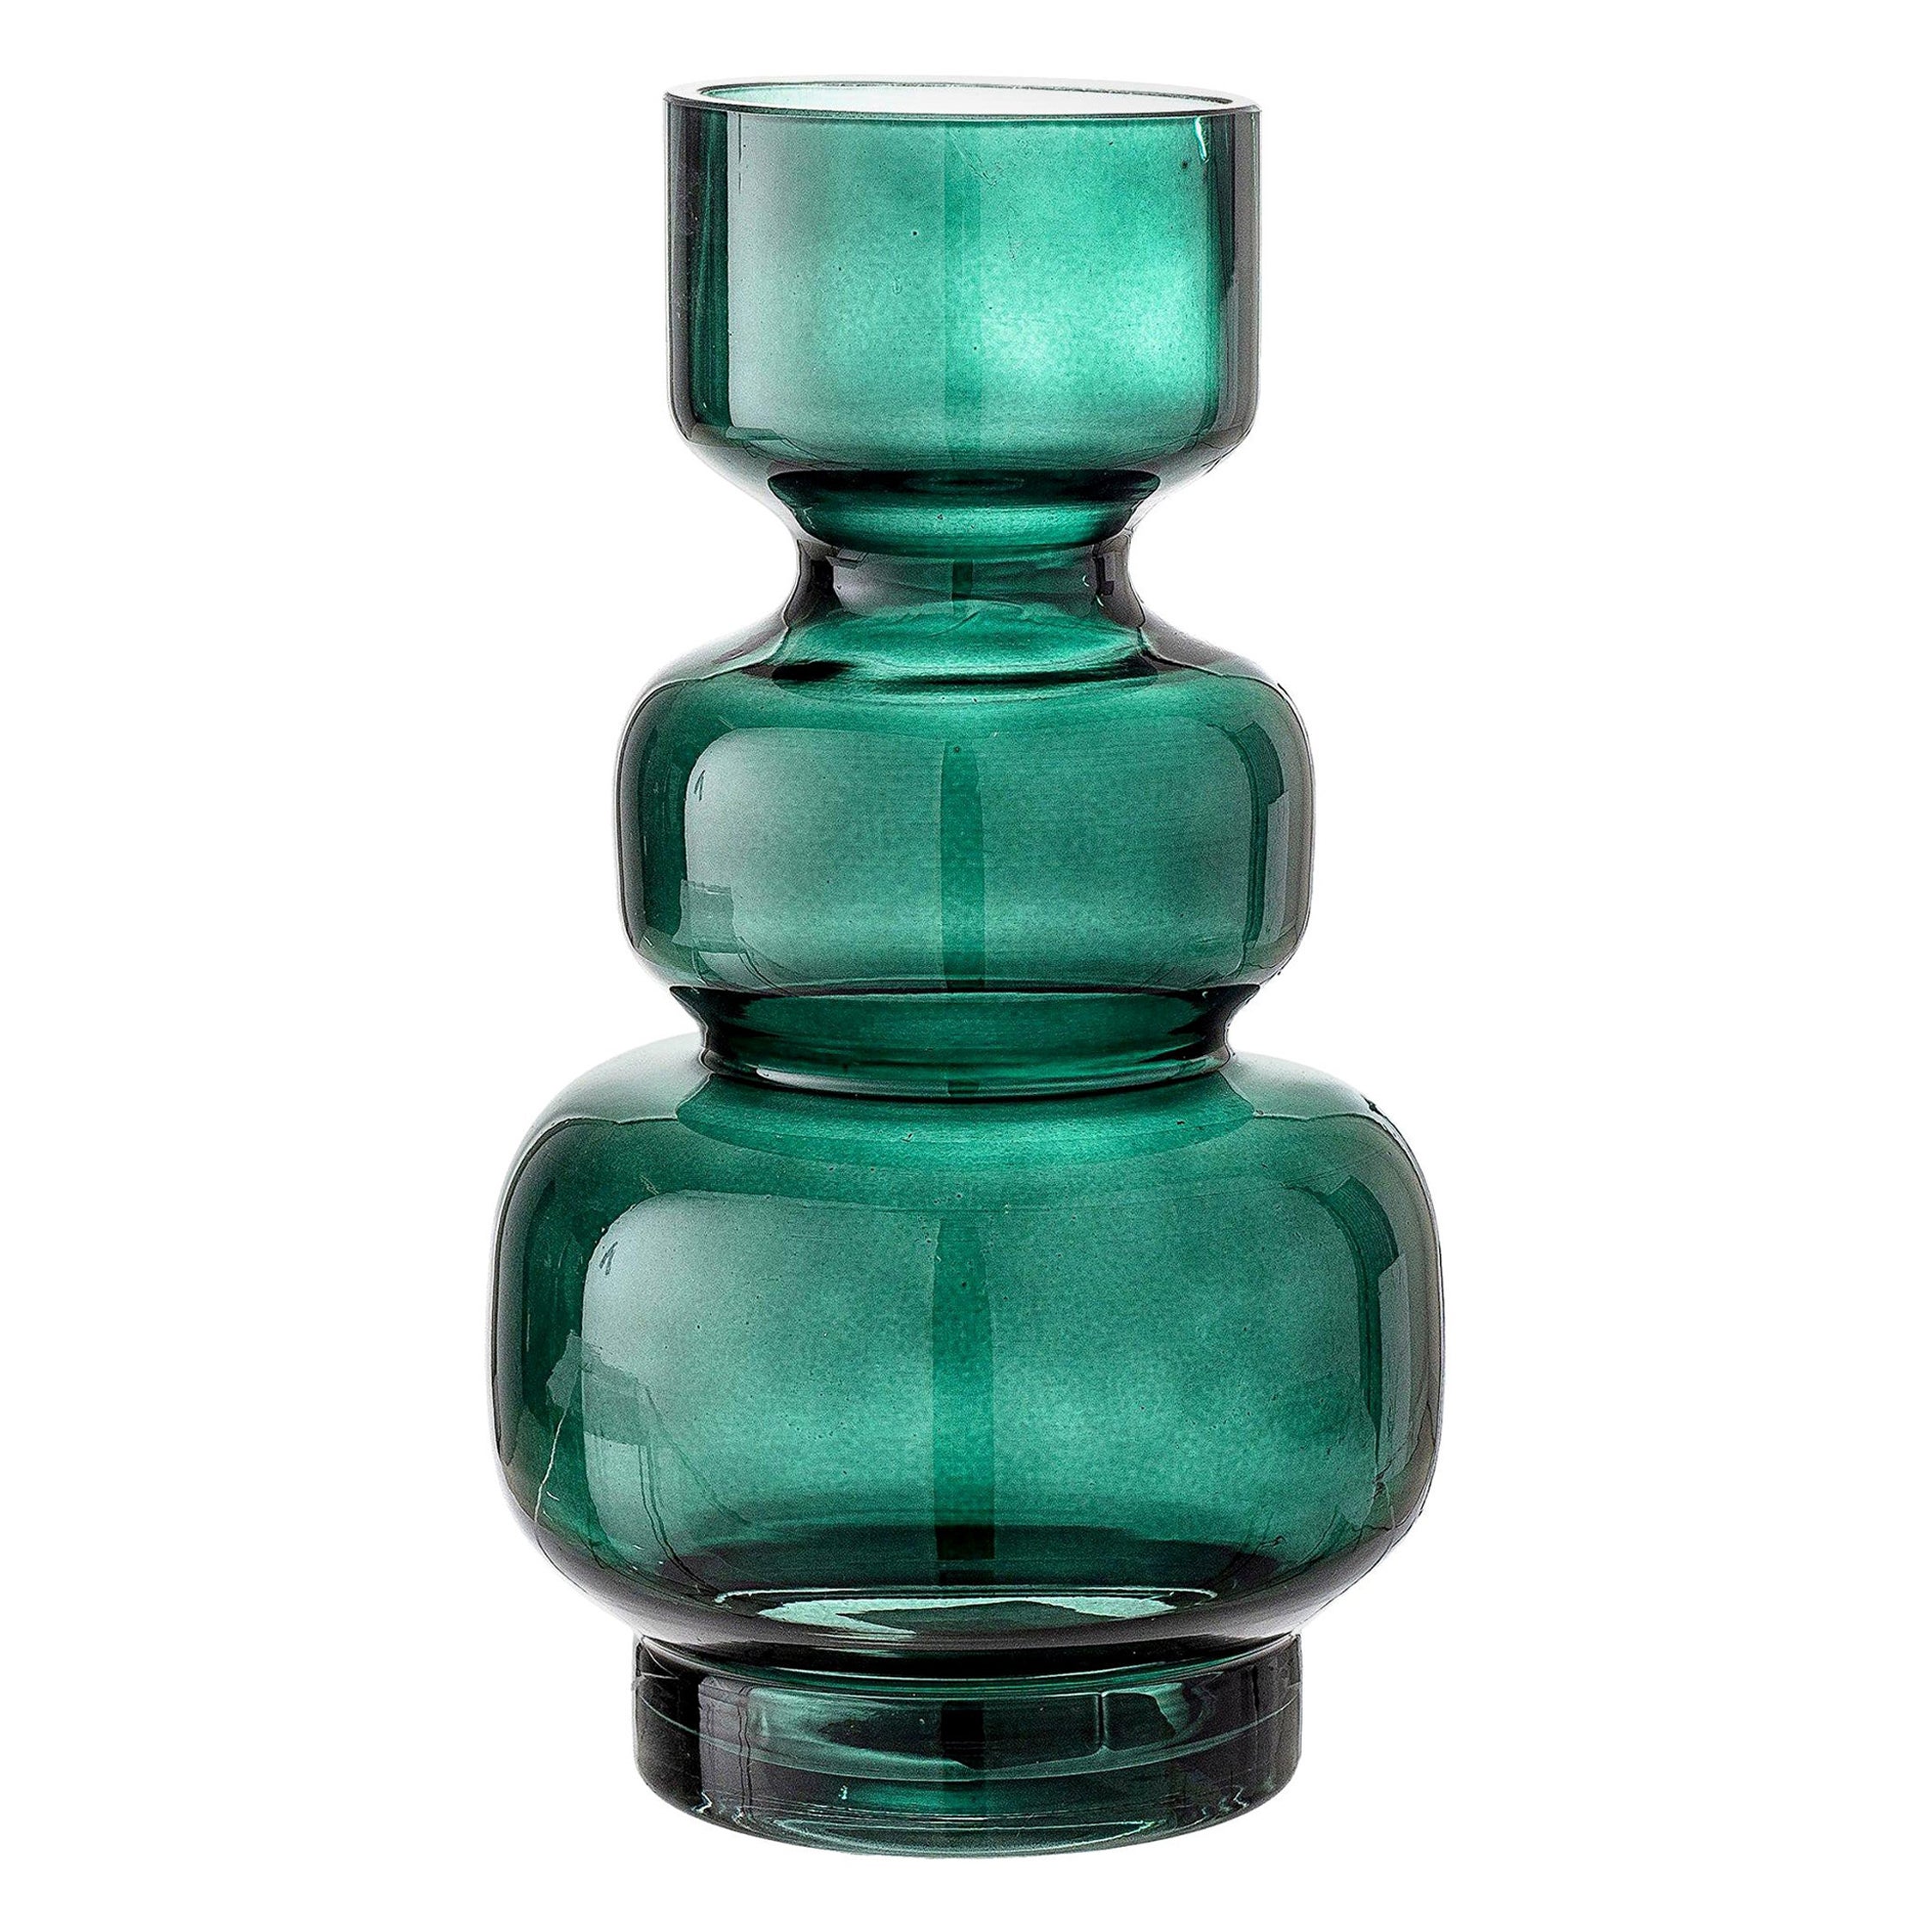 Brutalist Era Style Green Colored Glass Vase, 21st Century